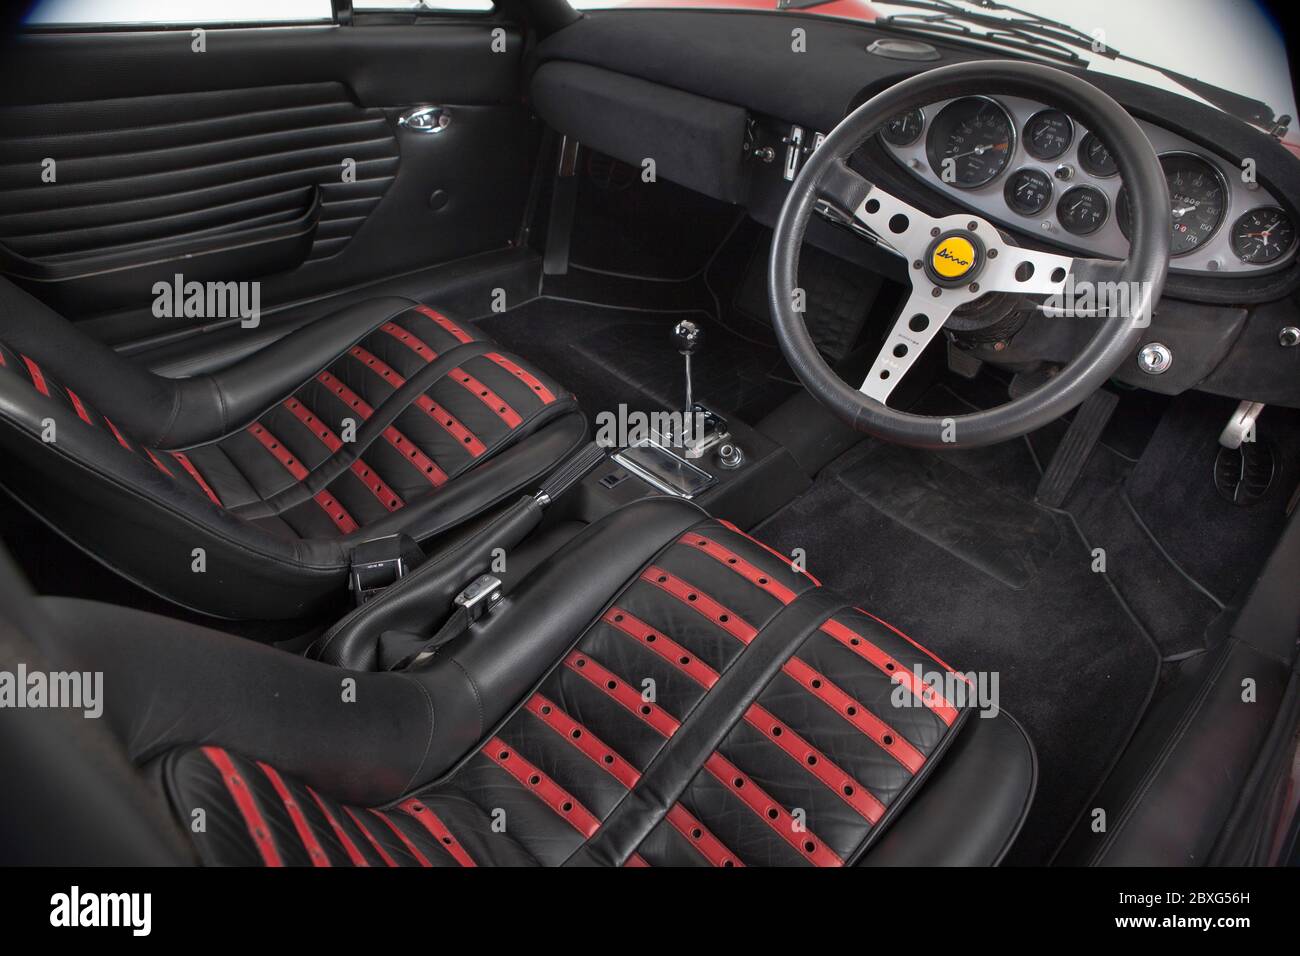 Ferrari Dino 246 GTS interni Foto stock - Alamy